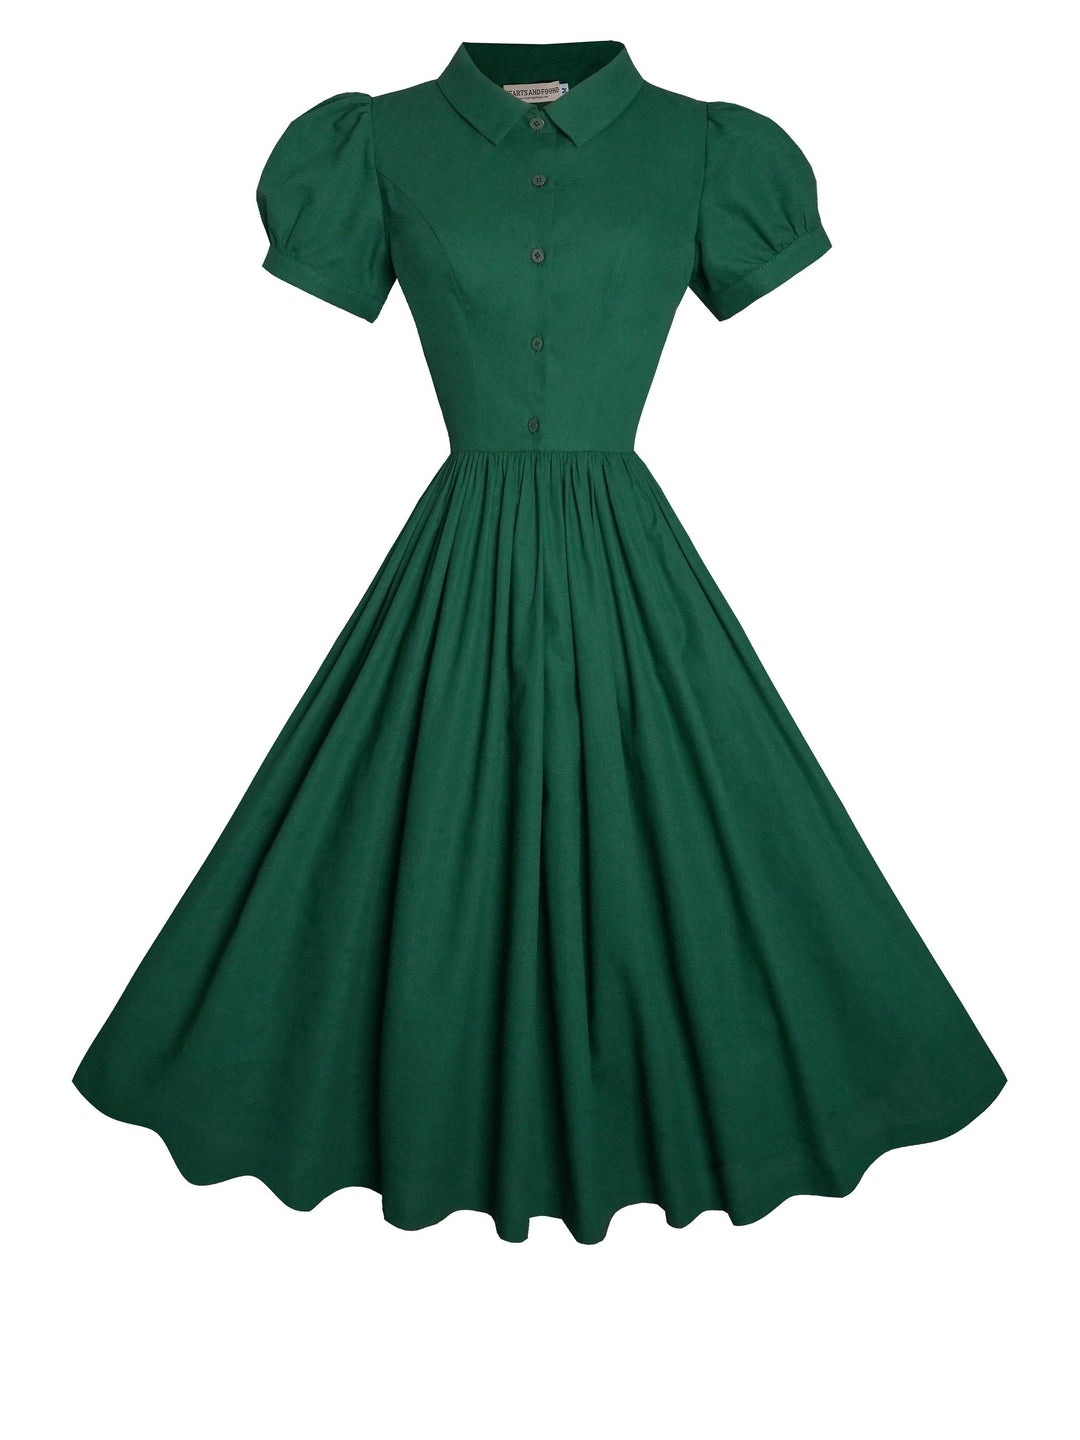 MTO - Judy Dress in Forest Green Linen